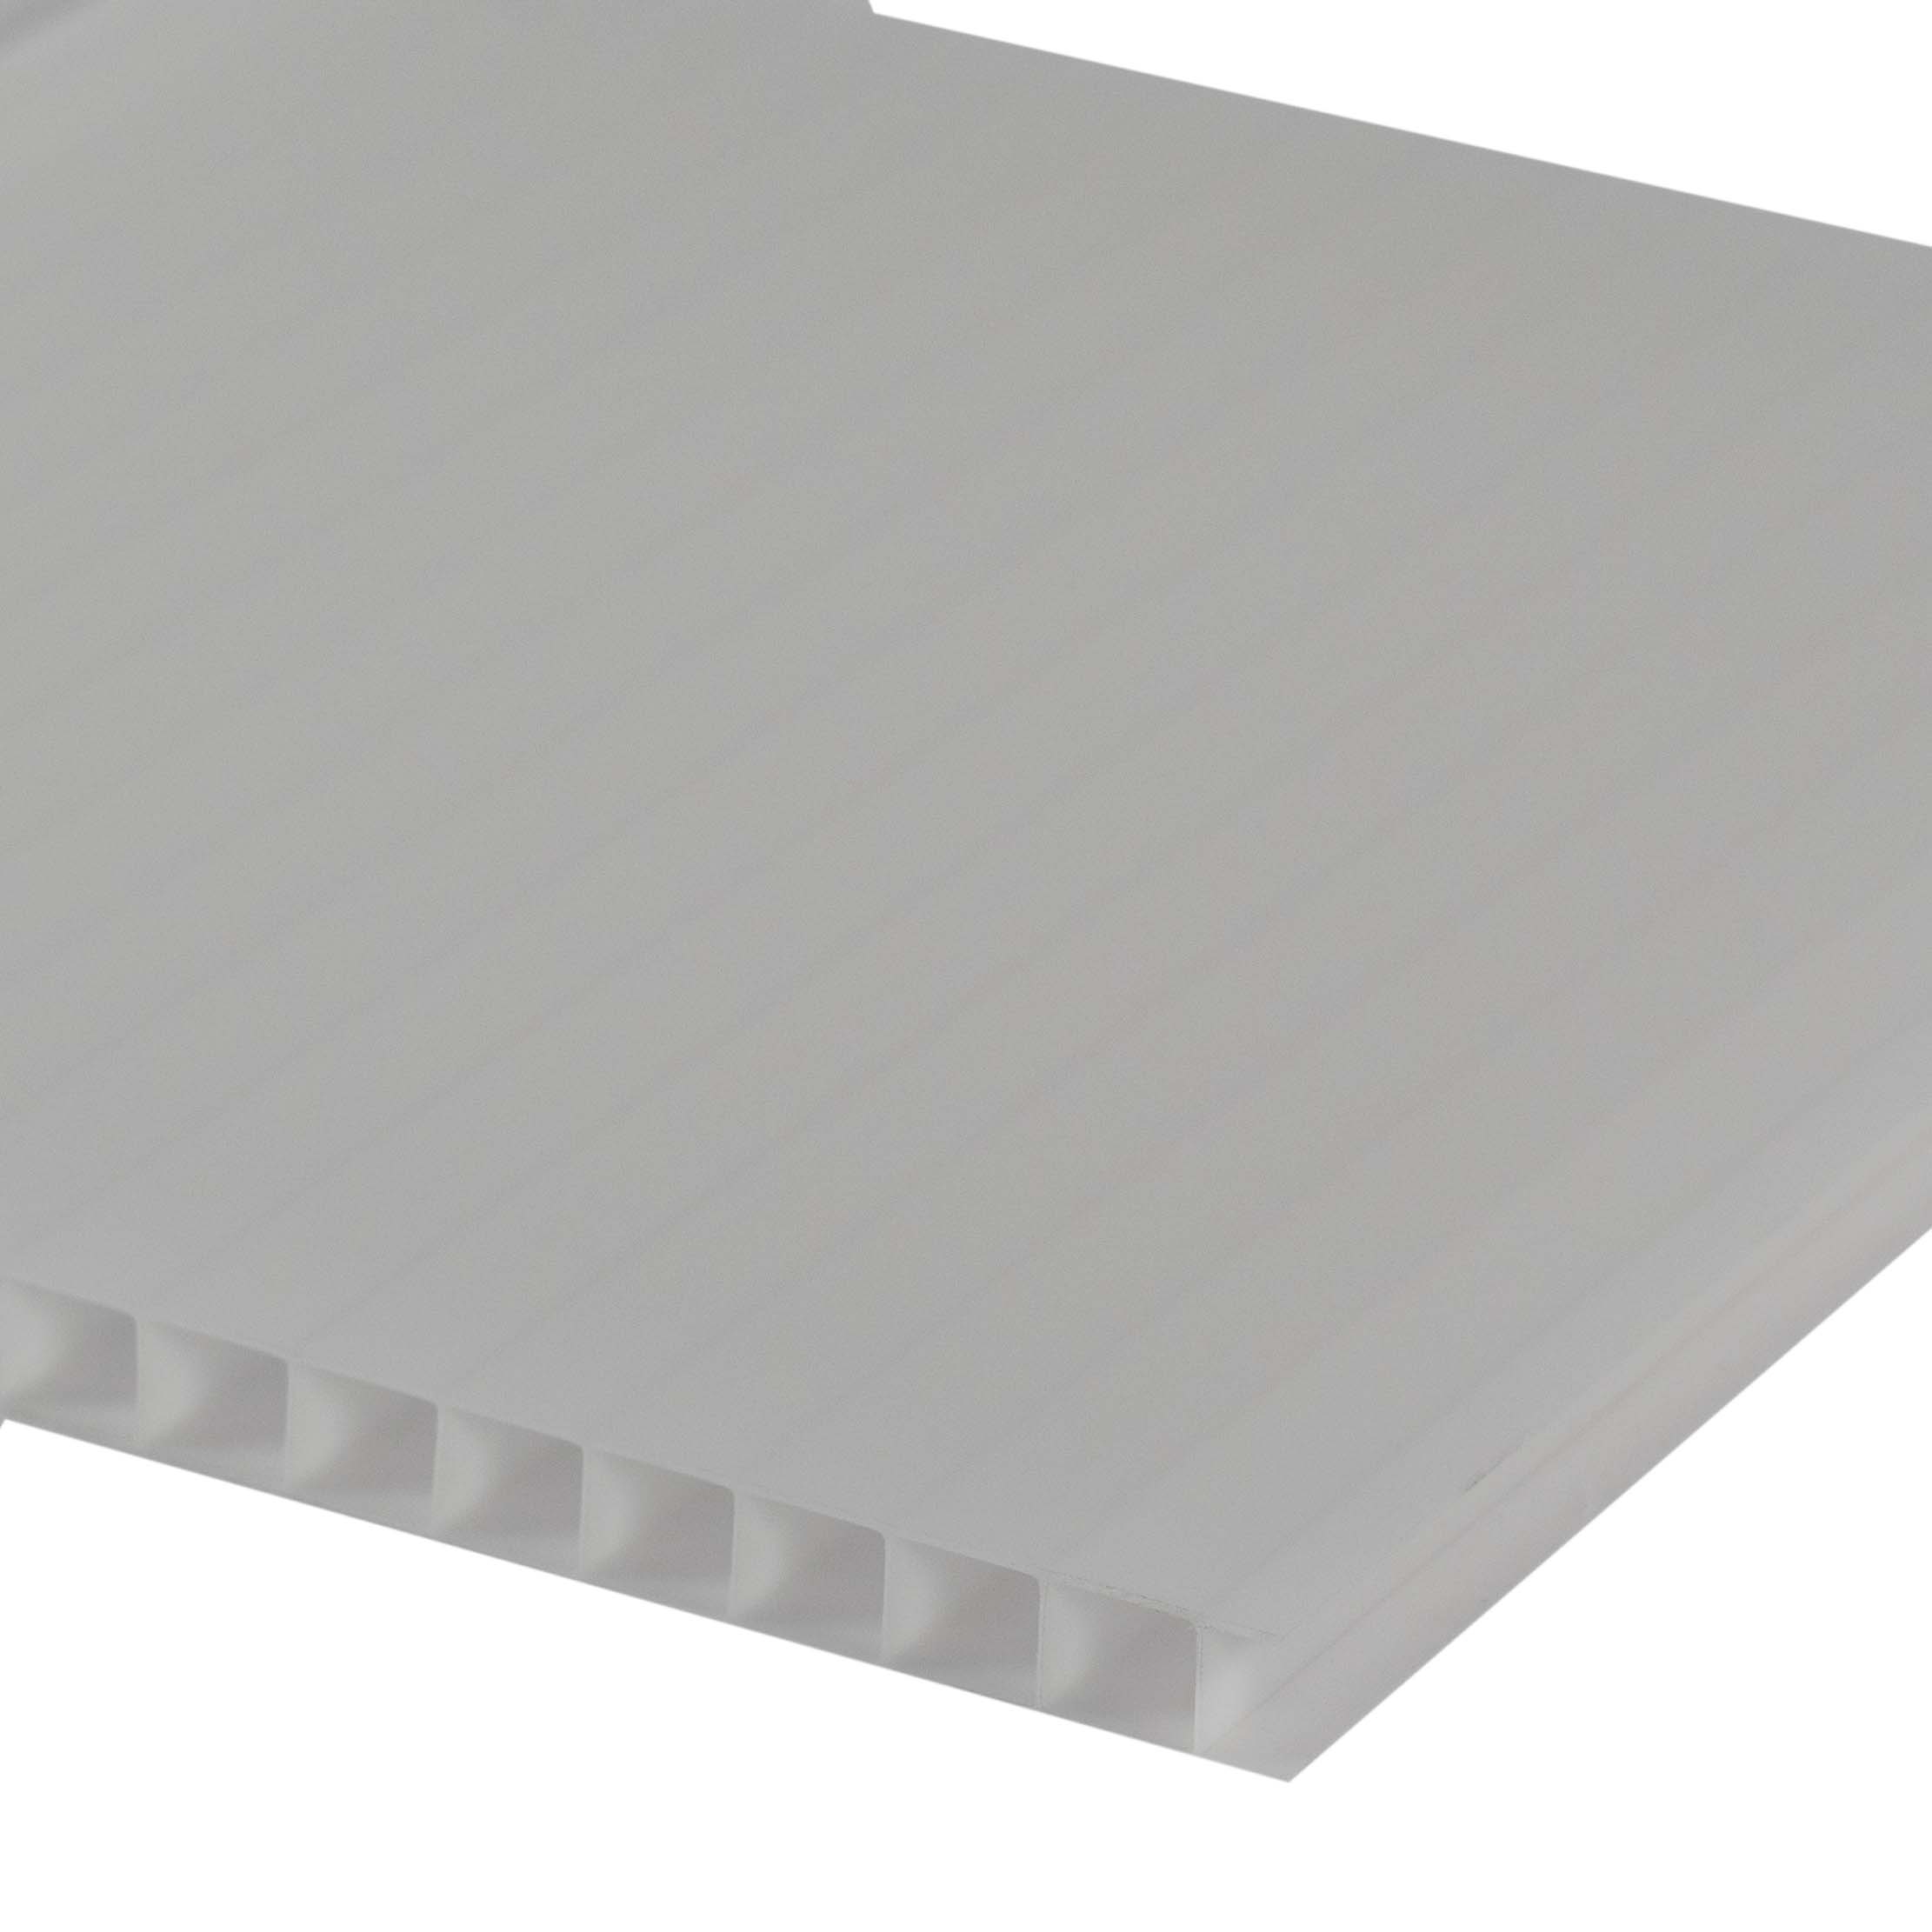 Doppelstegplatte 10 mm weiß / Opal - Polycarbonat Hohlkammerplatten - Hagelfest  